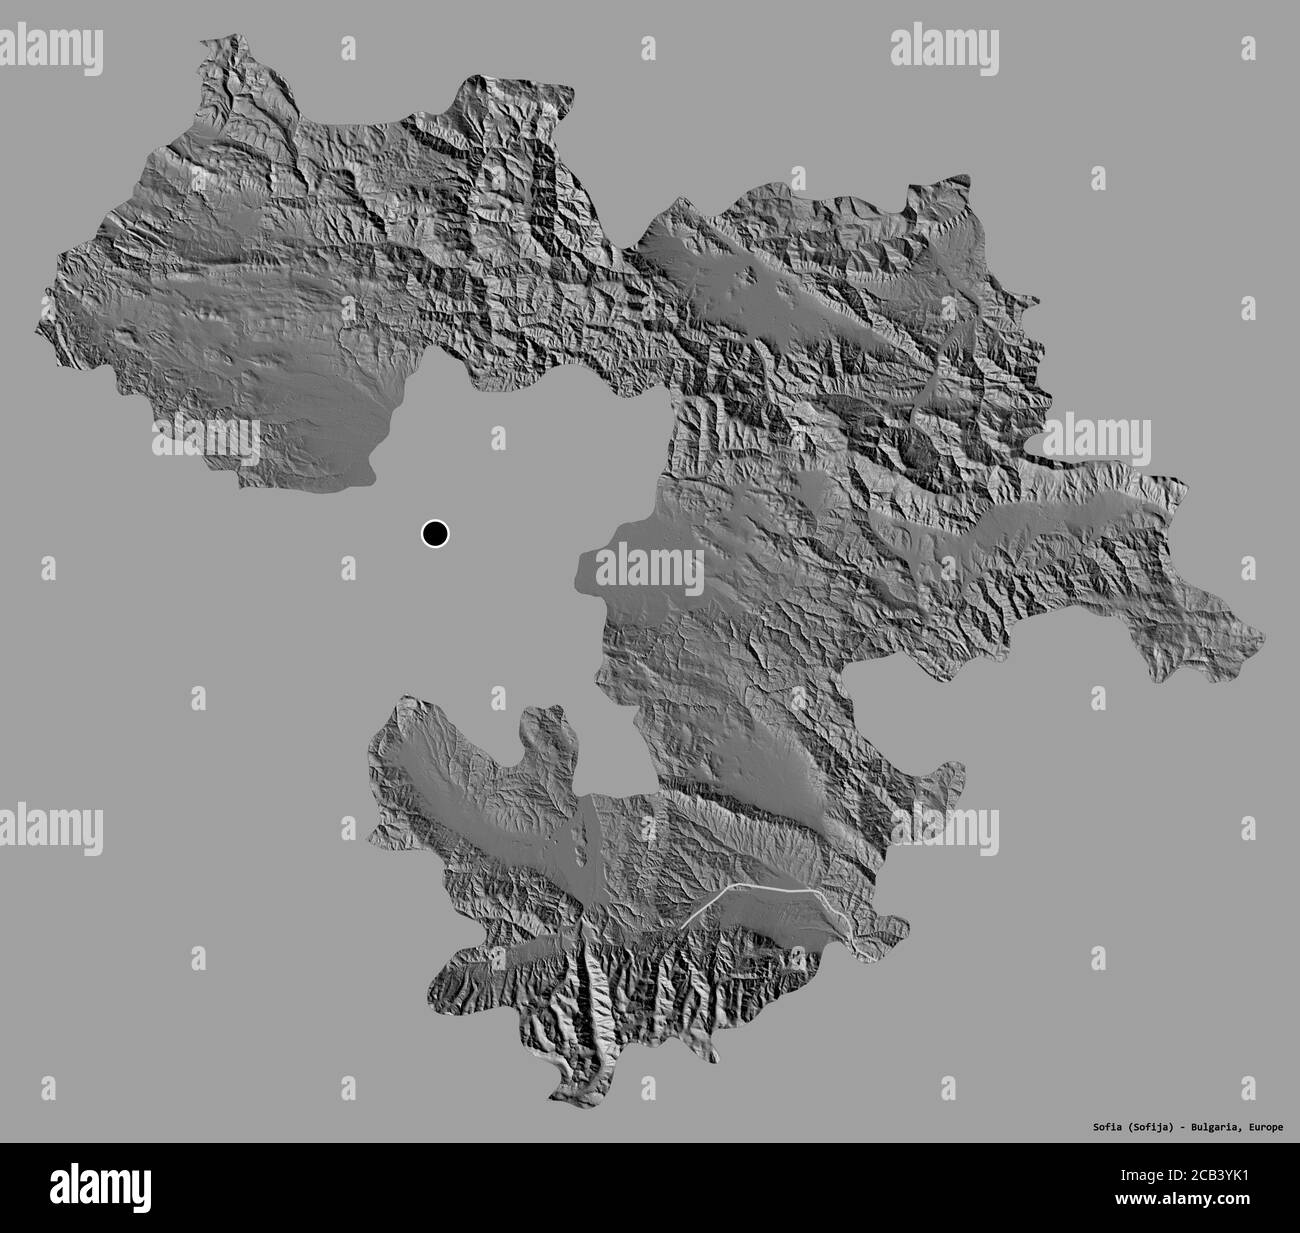 Sofia en un mapa fotografías e imágenes de alta resolución - Alamy